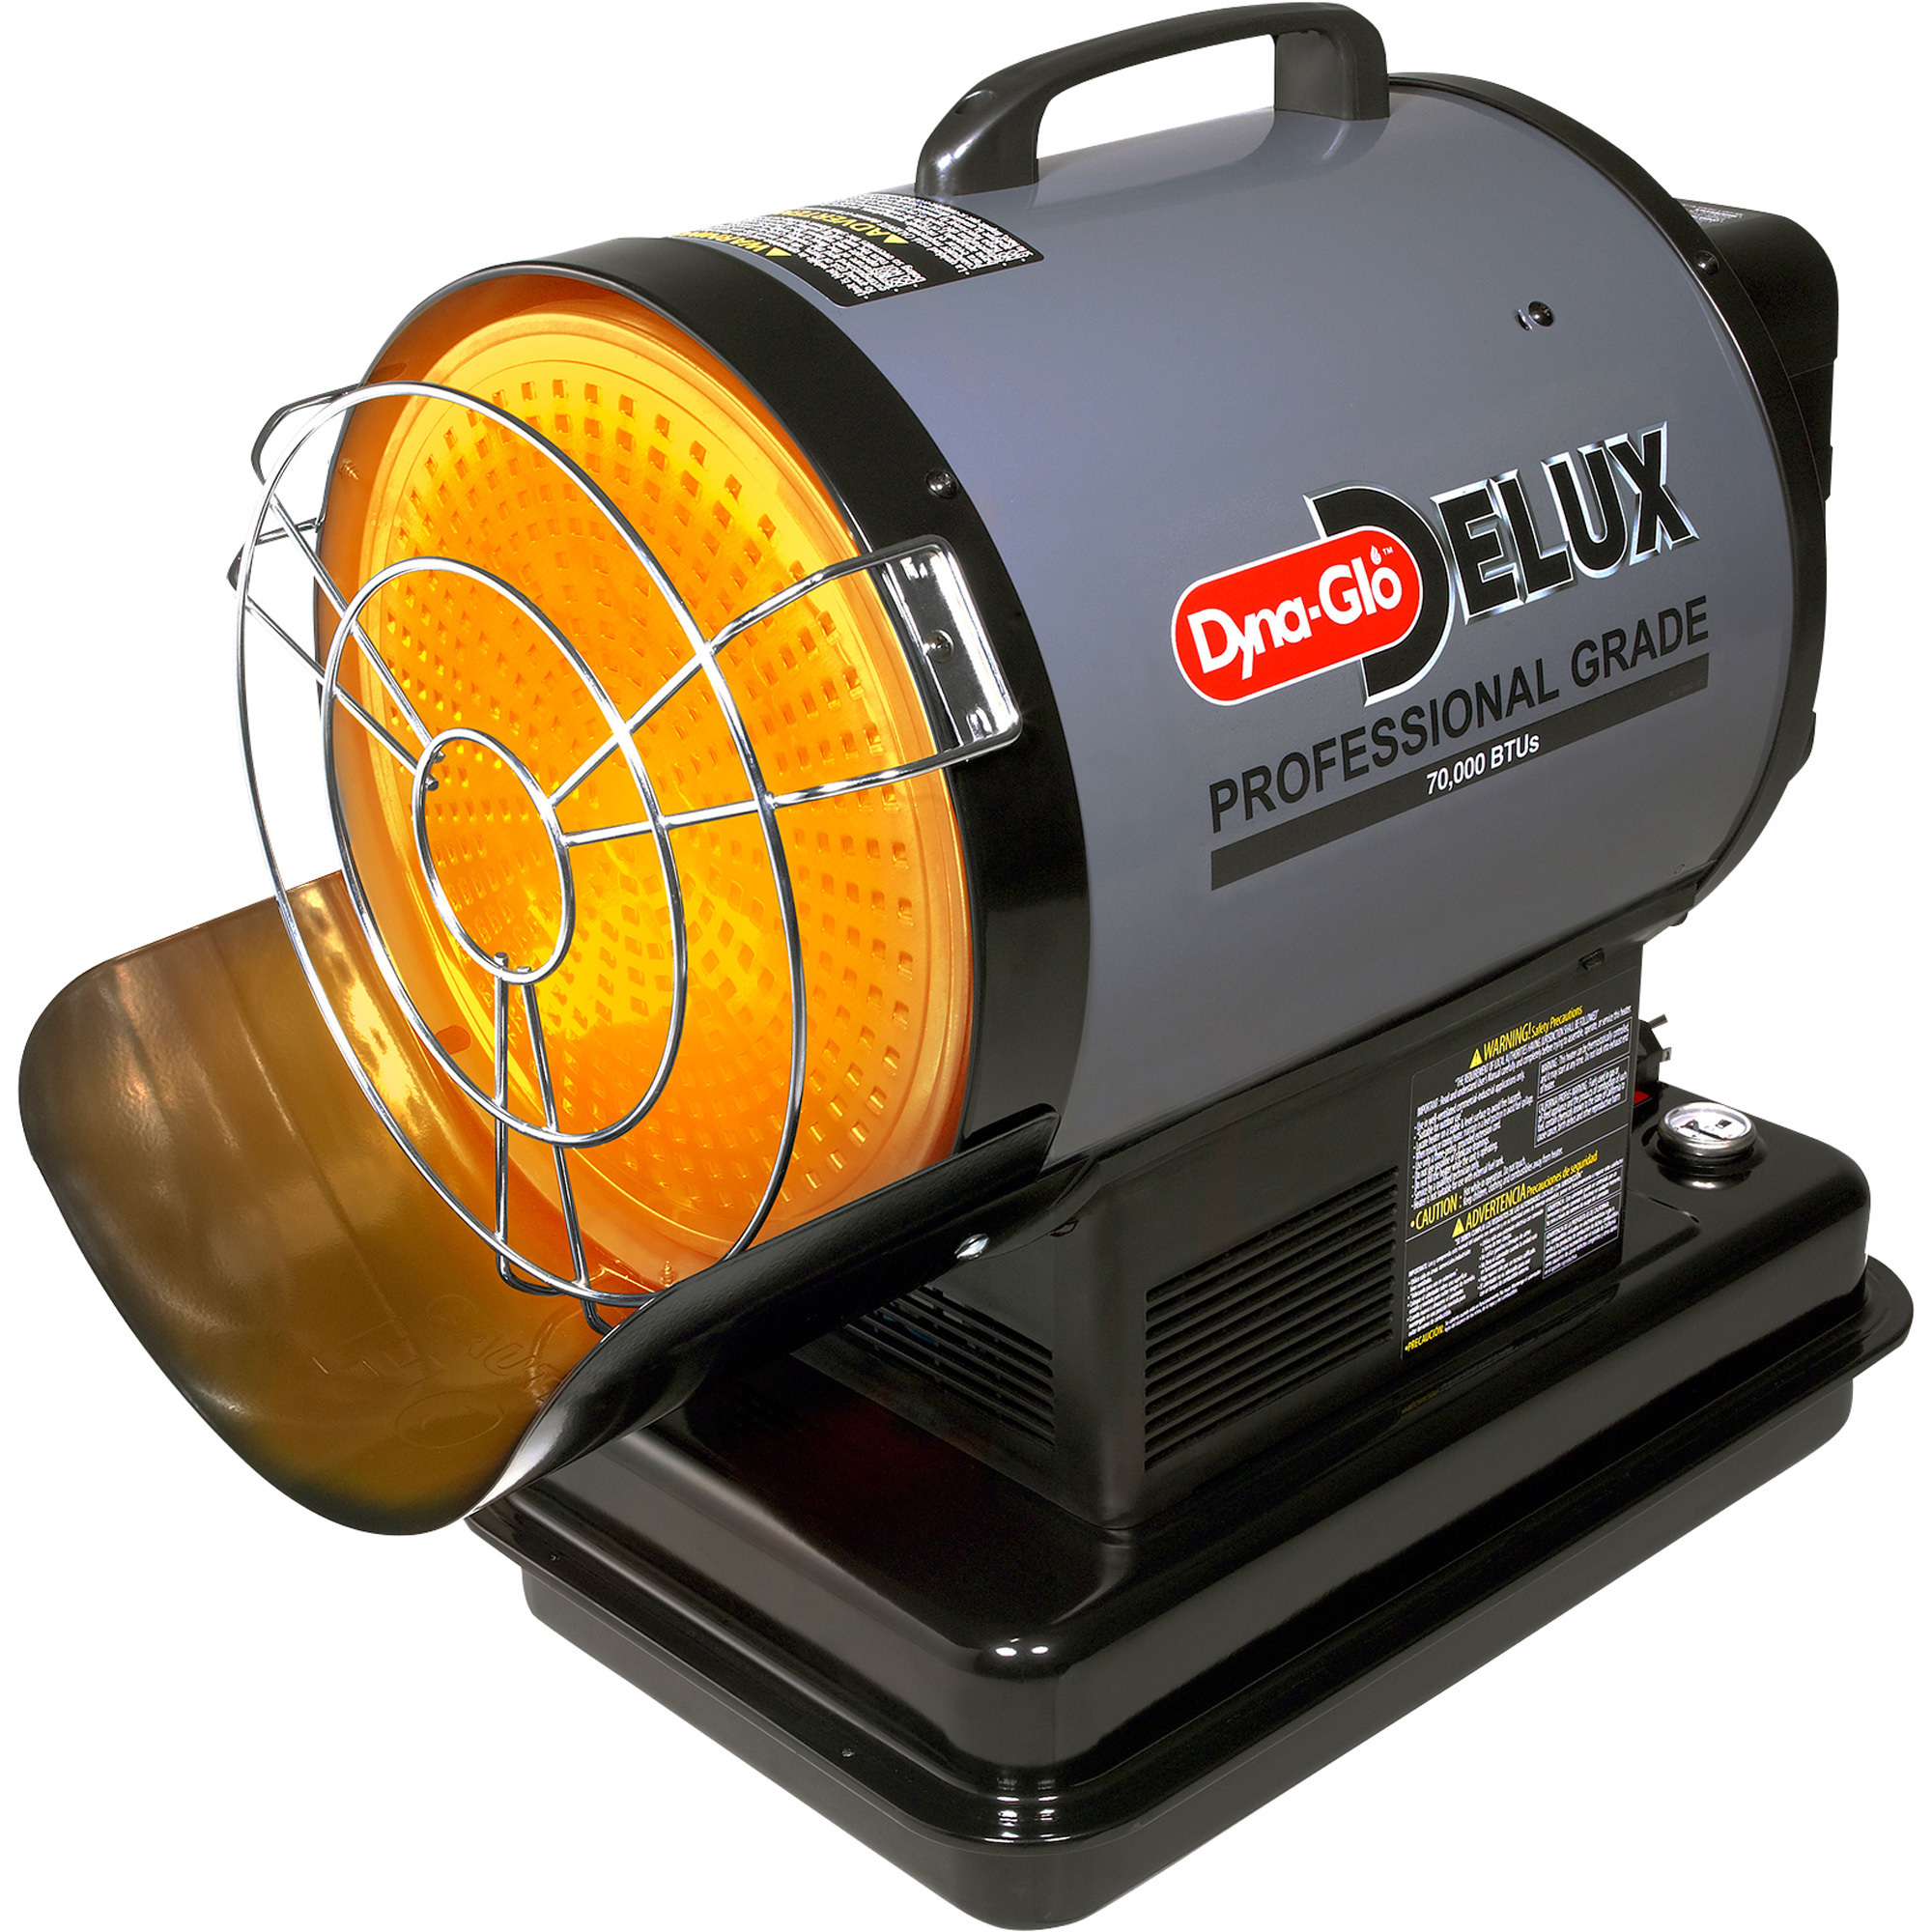 Dyna-Glo Delux Kerosene Forced Air Heater, 70,000 BTU, Model SF70DGD